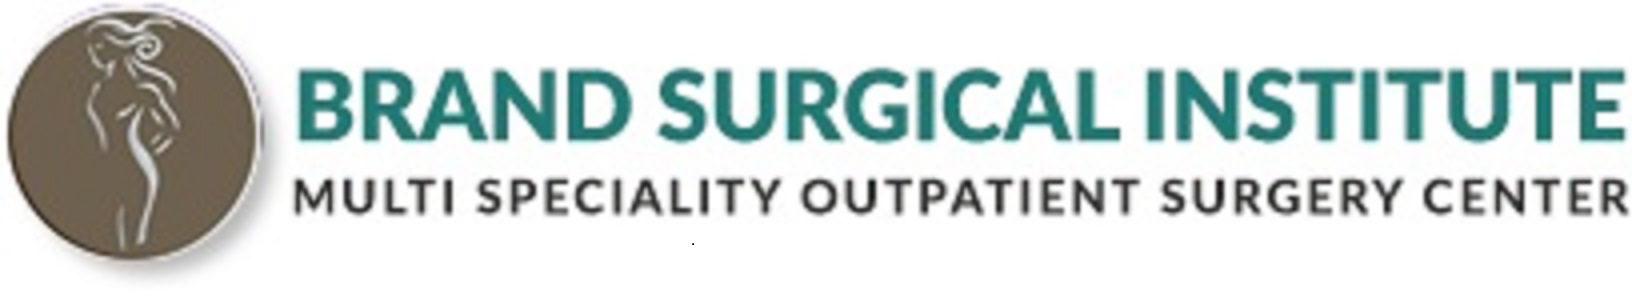 Brand Surgical Institute's Logo